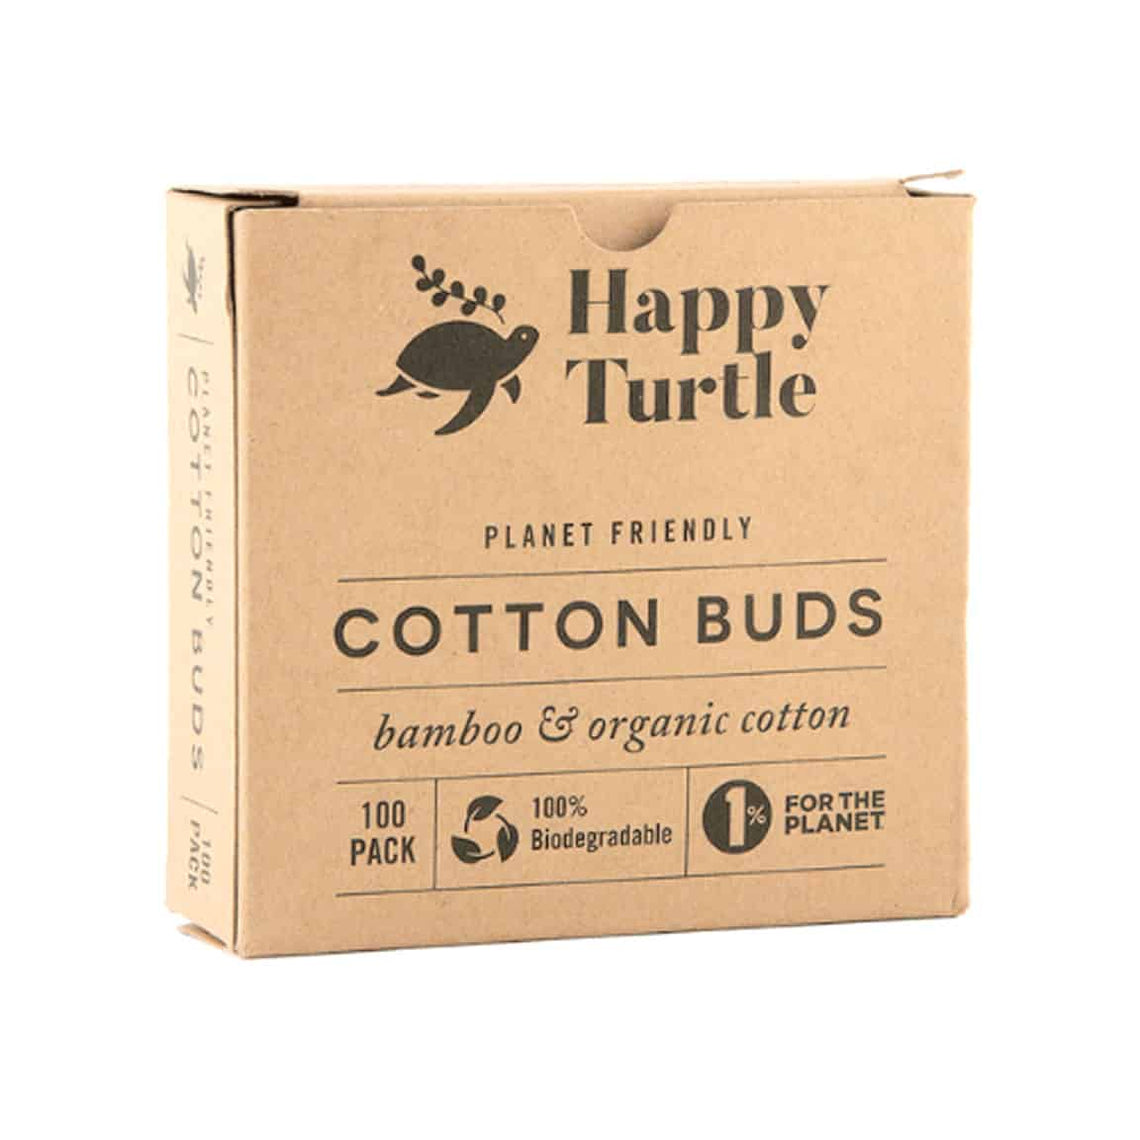 Bamboo Cotton Buds - Square box